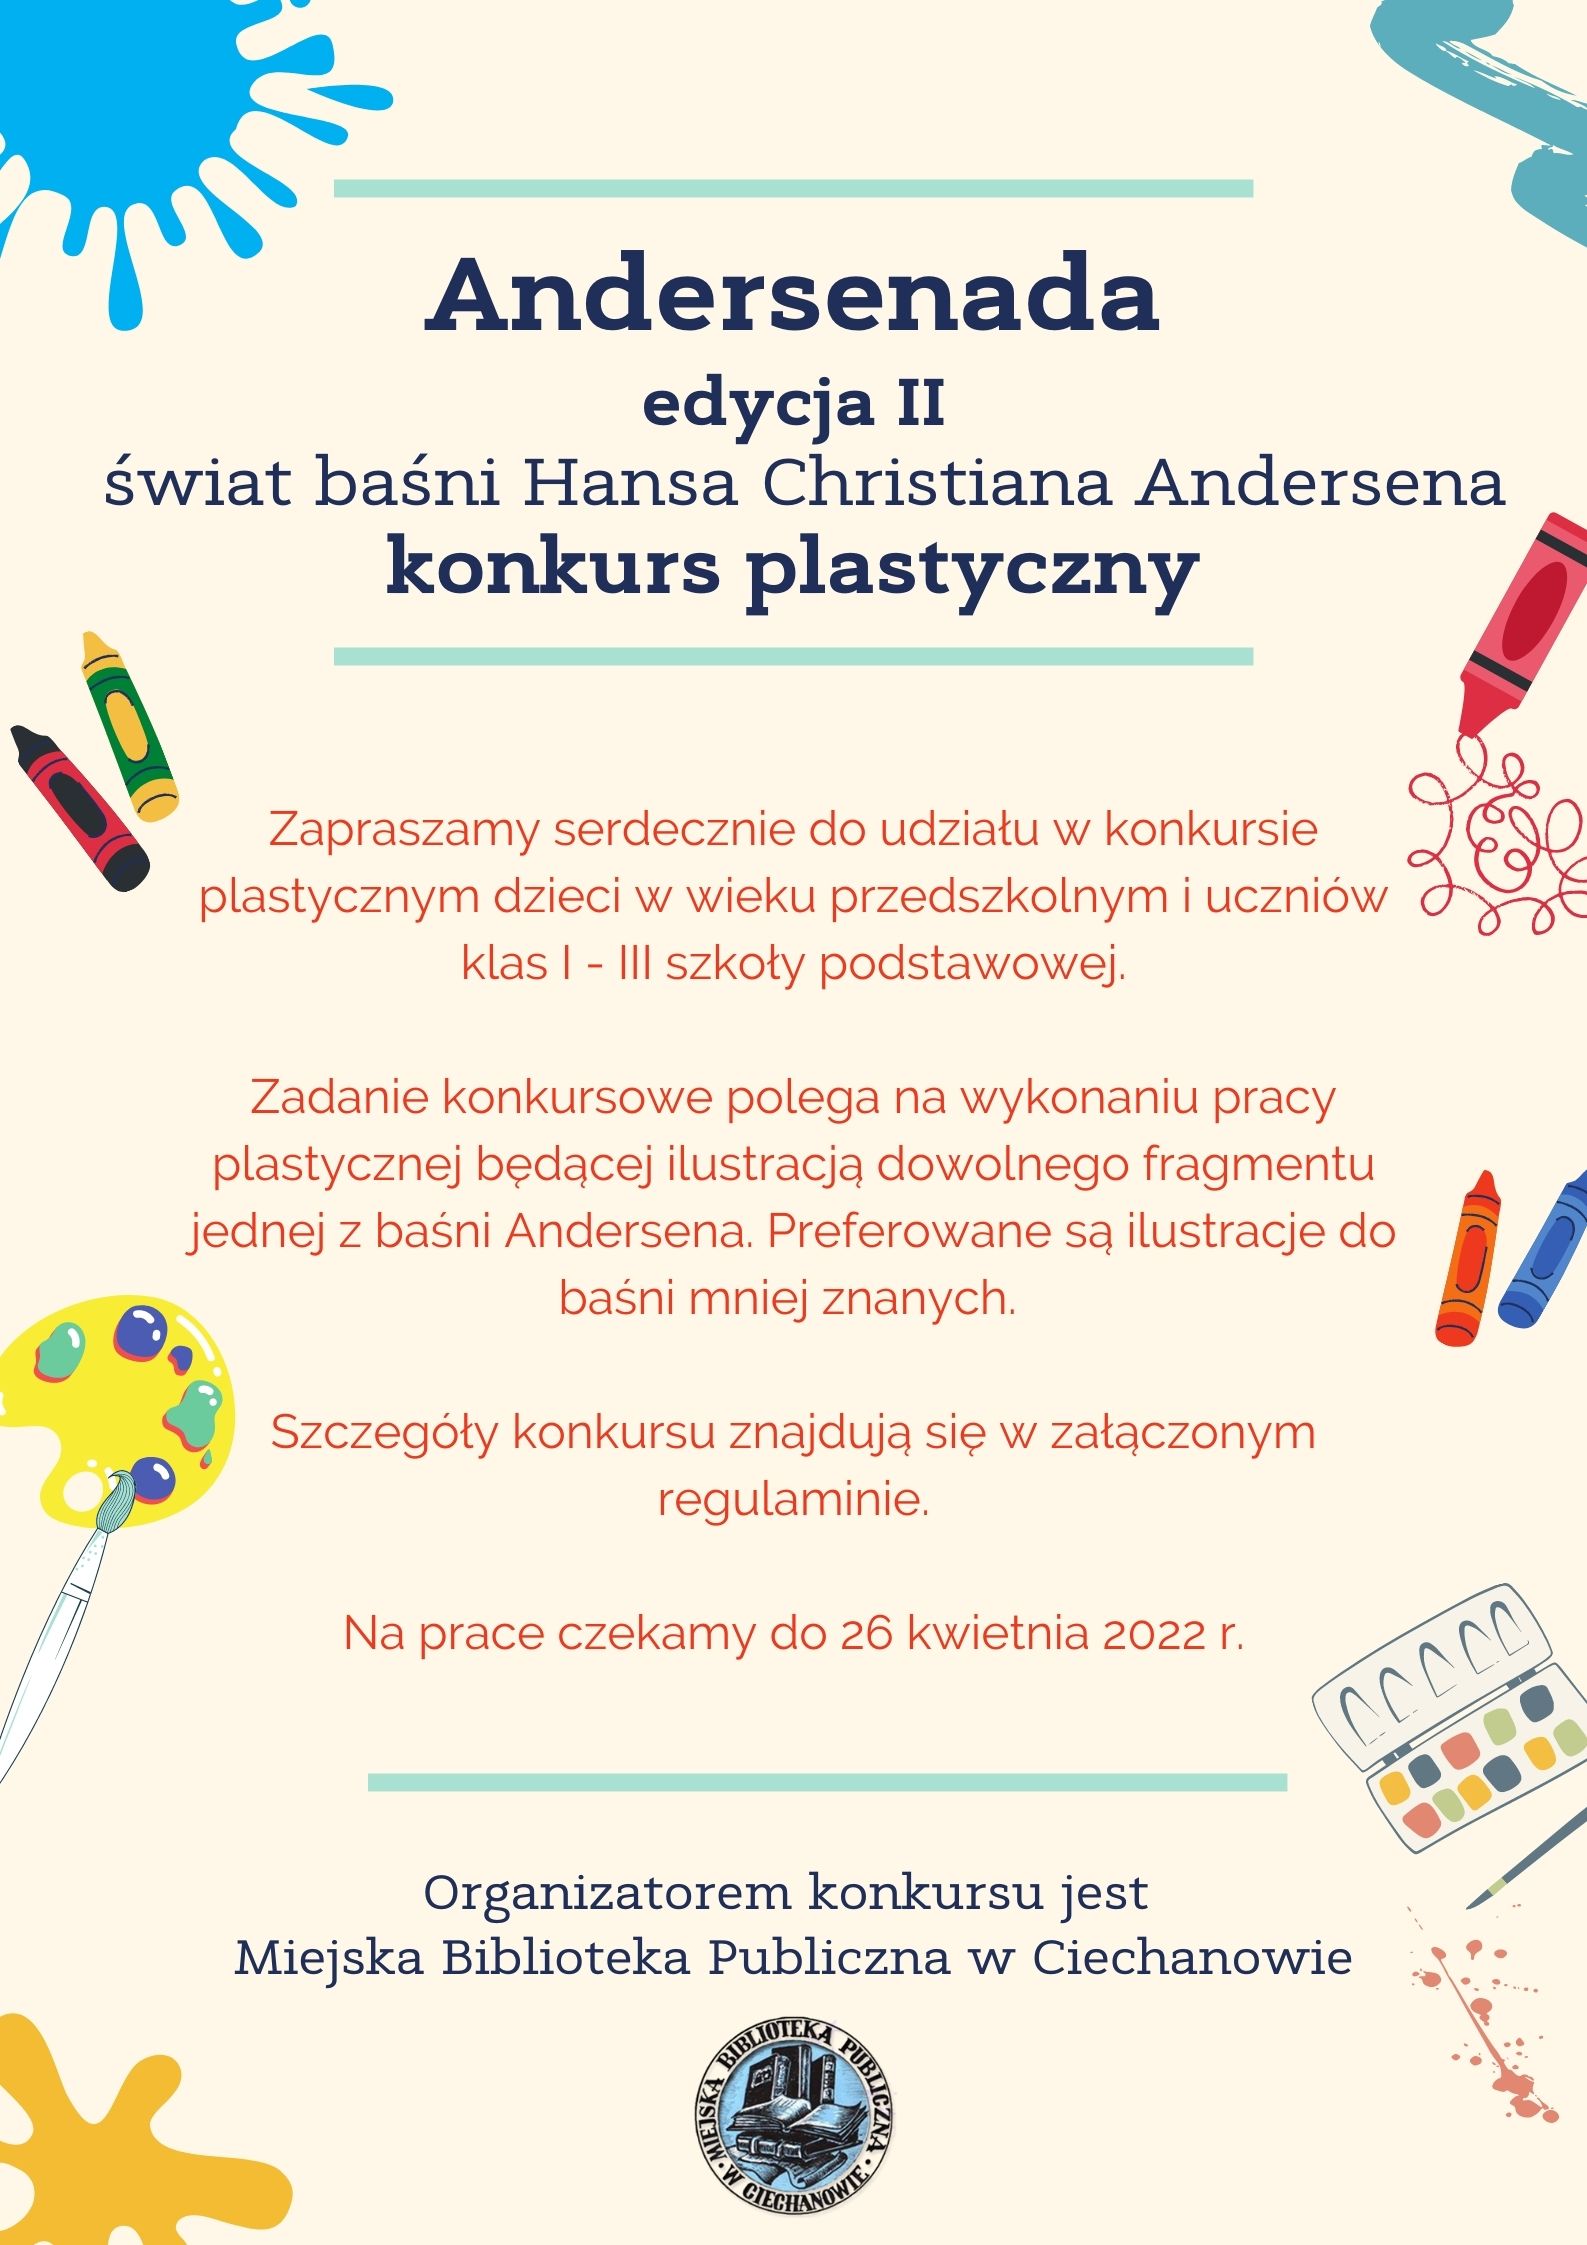 „Andersenada swiat basni Hansa Christiana Andersena konkurs plastyczny 20221